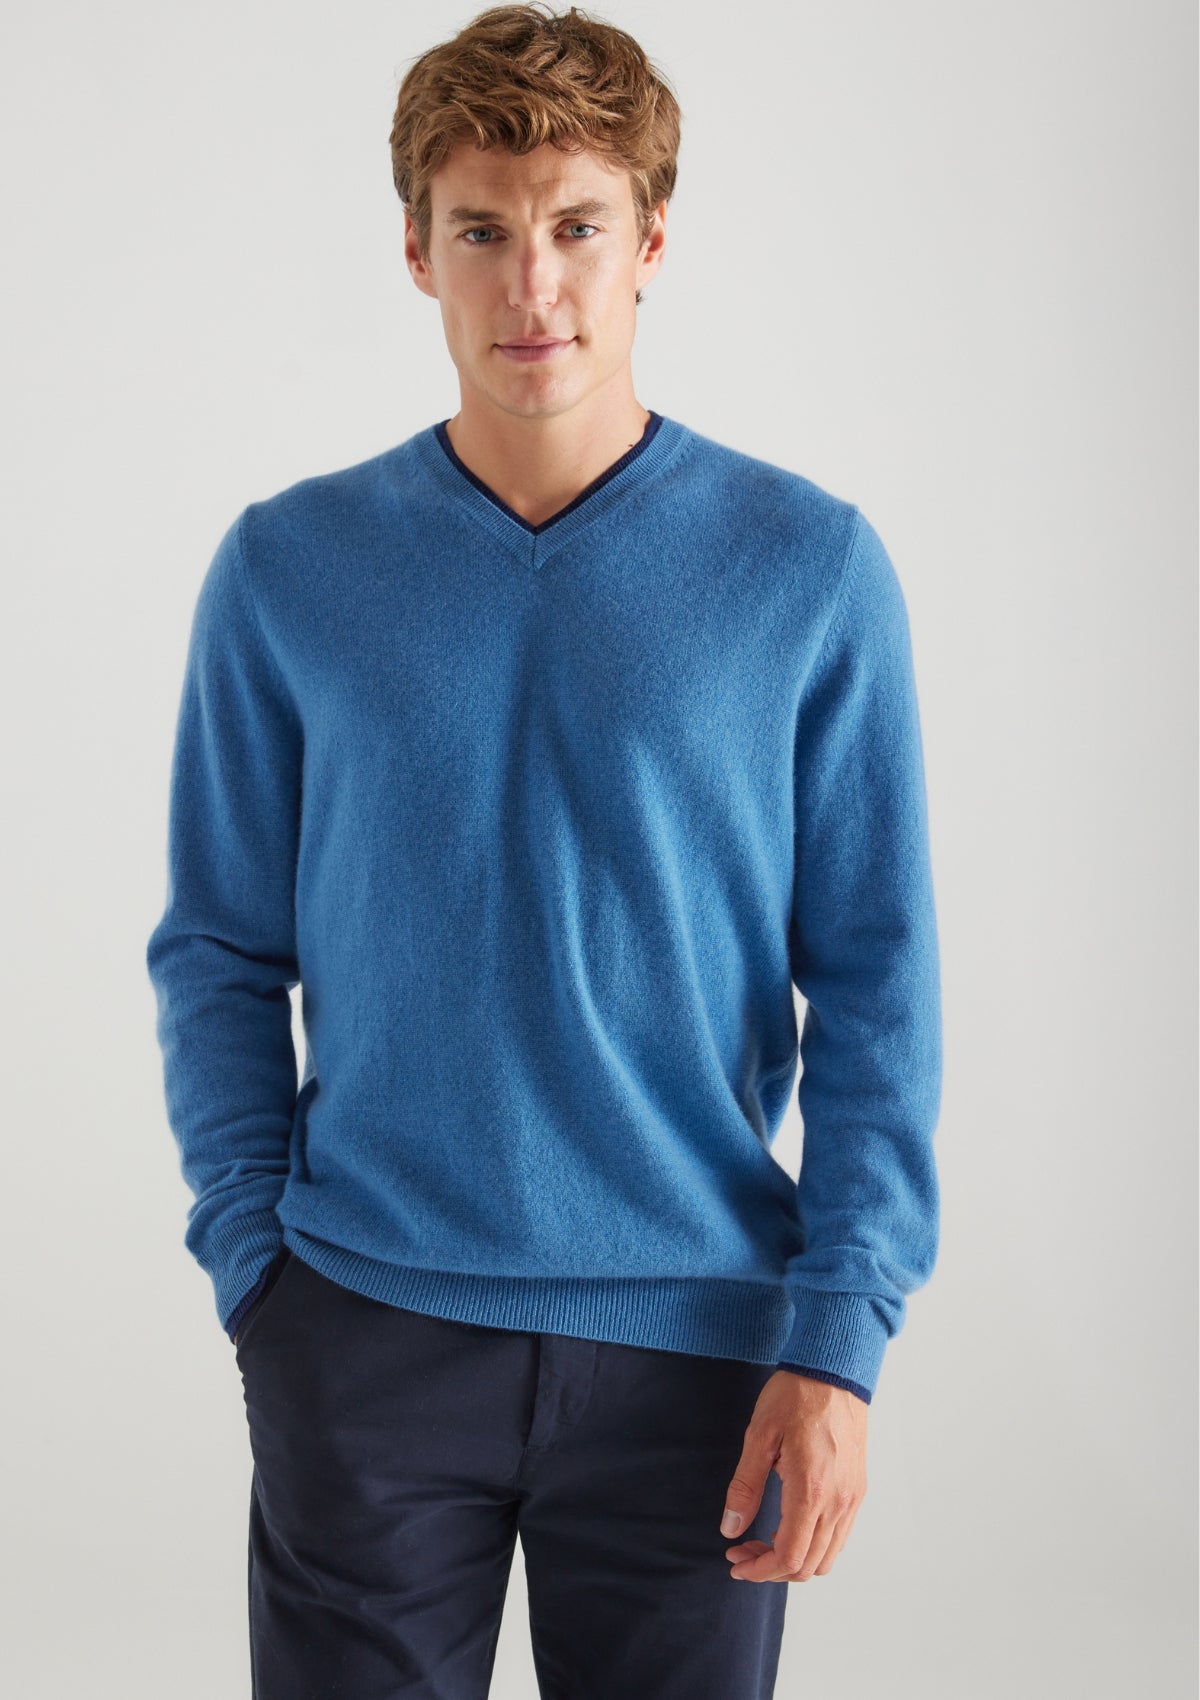 Mens Cashmere V Neck Sweater in Marina Blue